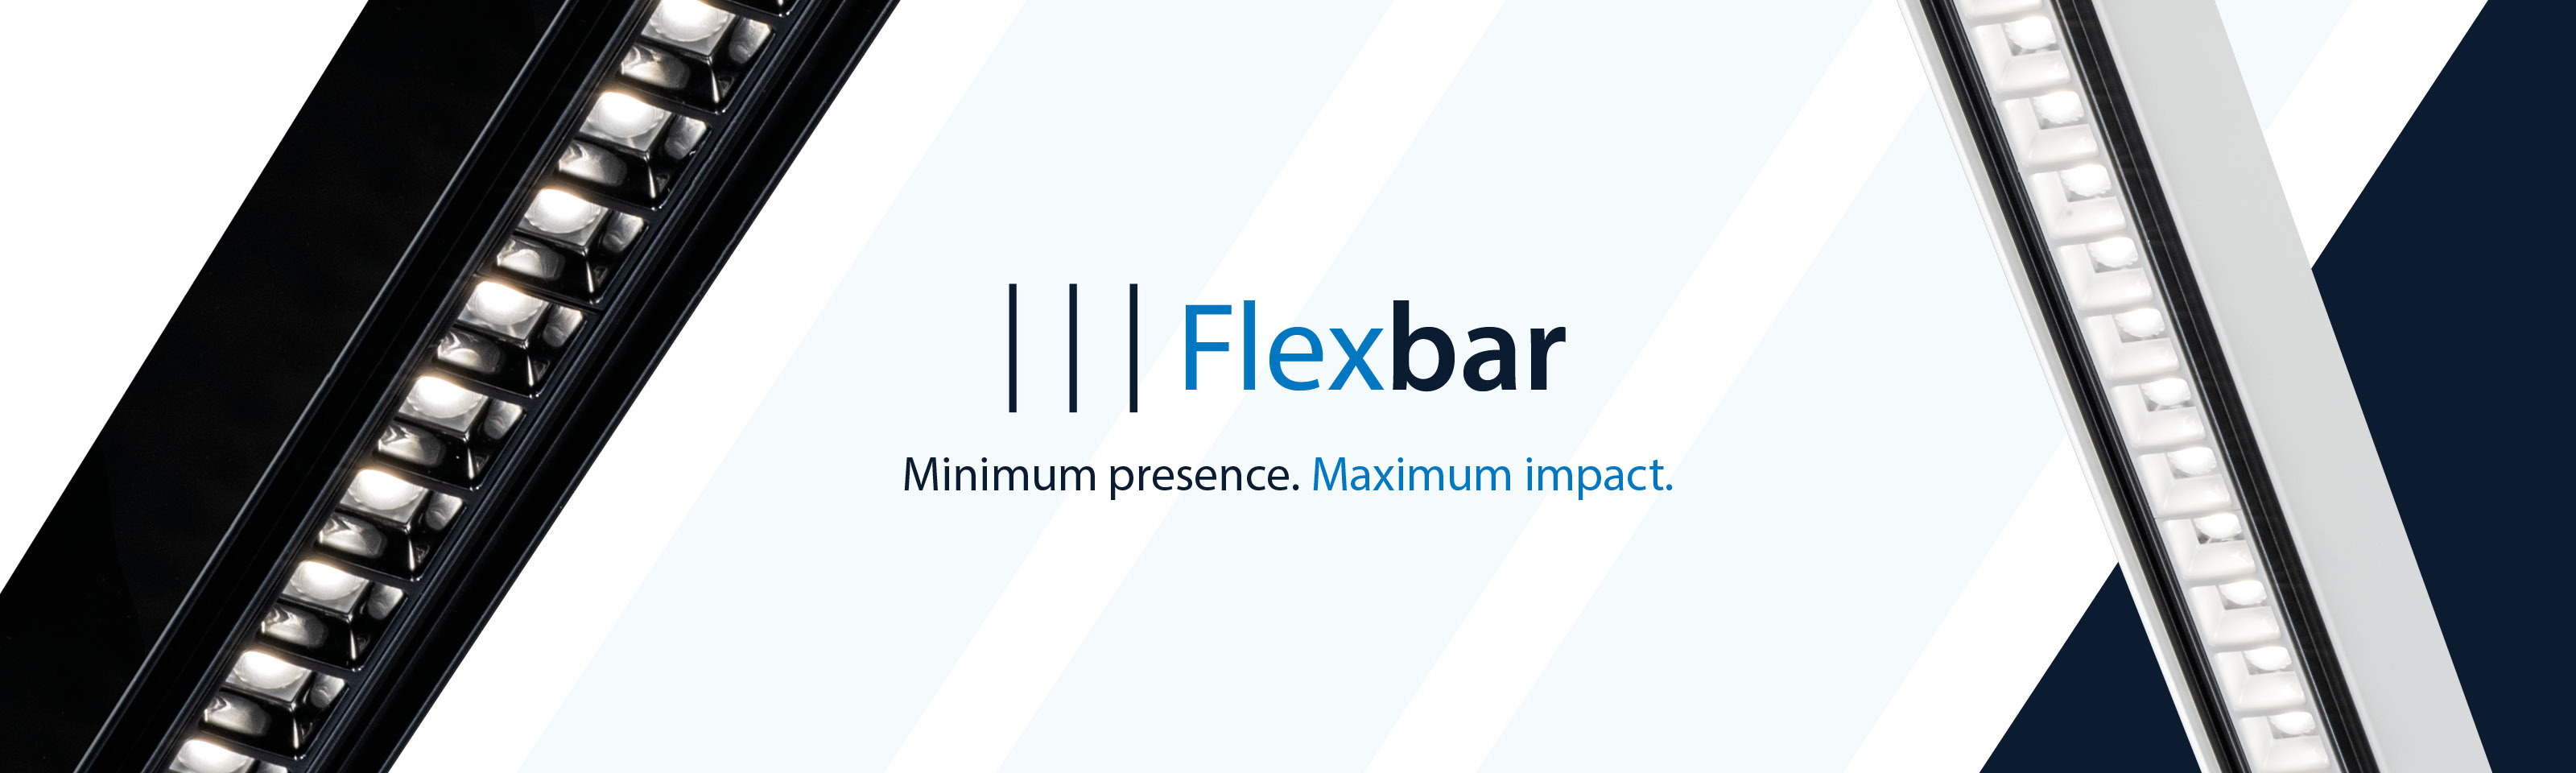 Flexbar - The stylish, slimline luminaire for modern working environments